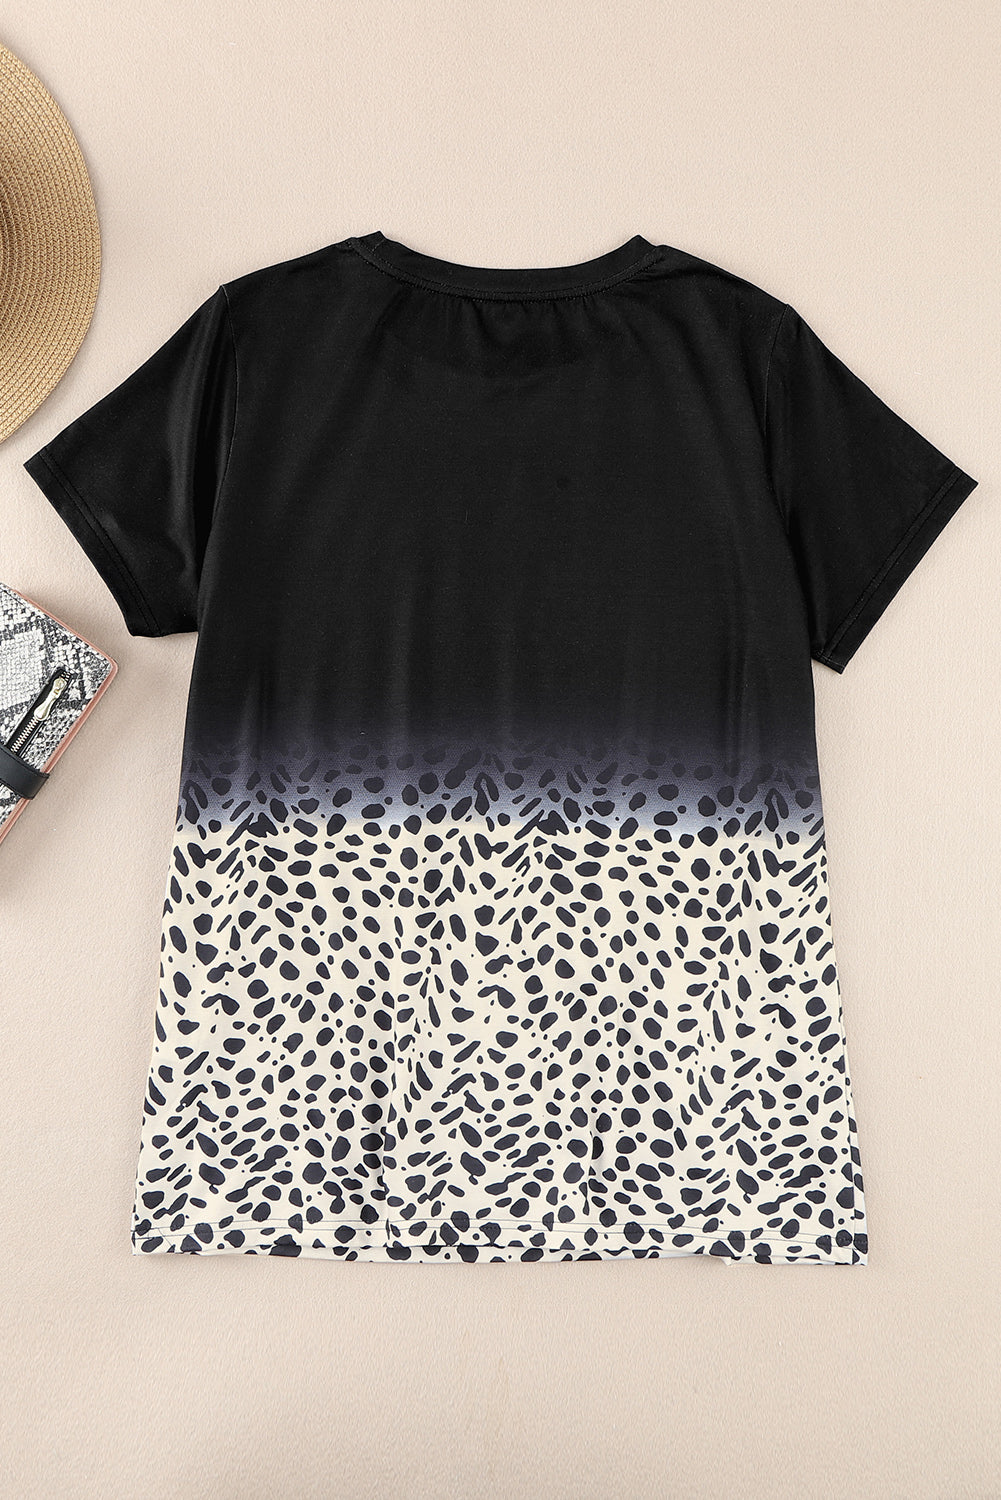 LC25220572-2-S, LC25220572-2-M, LC25220572-2-L, LC25220572-2-XL, Black Ombre Leopard Print T-shirt